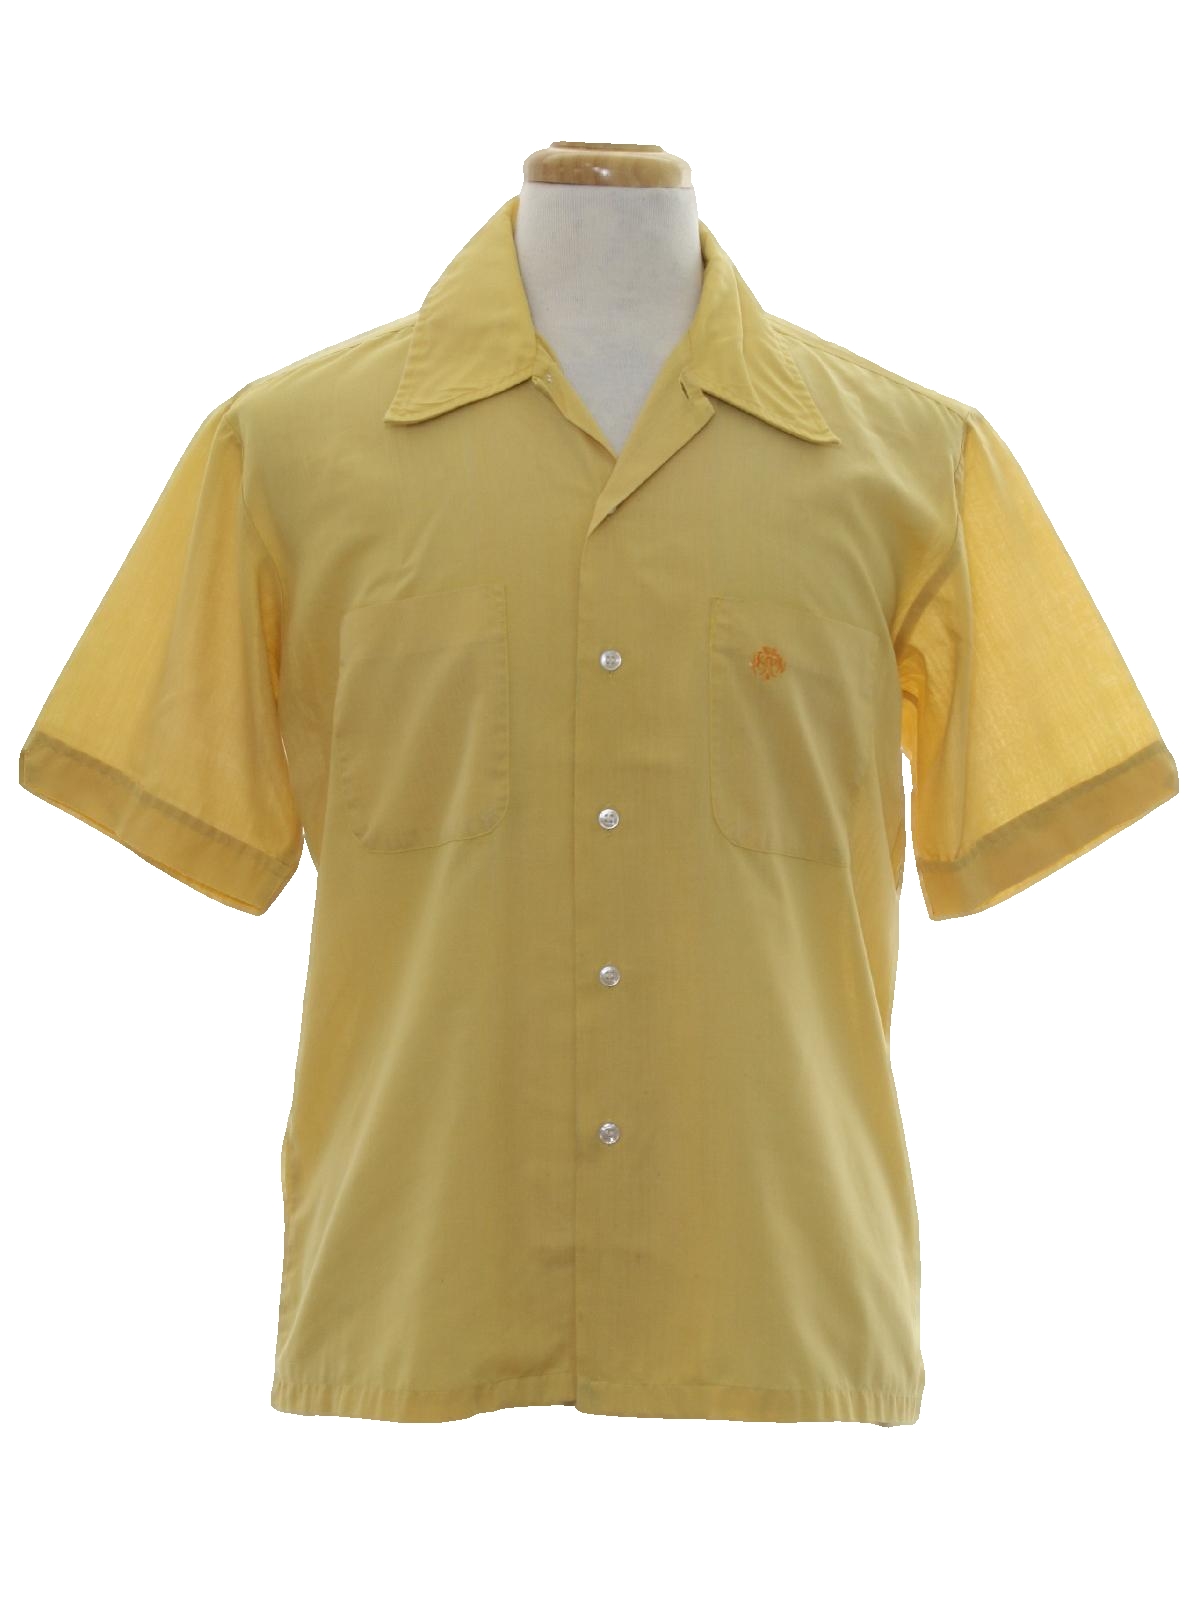 Retro Seventies Shirt: 70s -no label- Mens harvest gold polyester ...